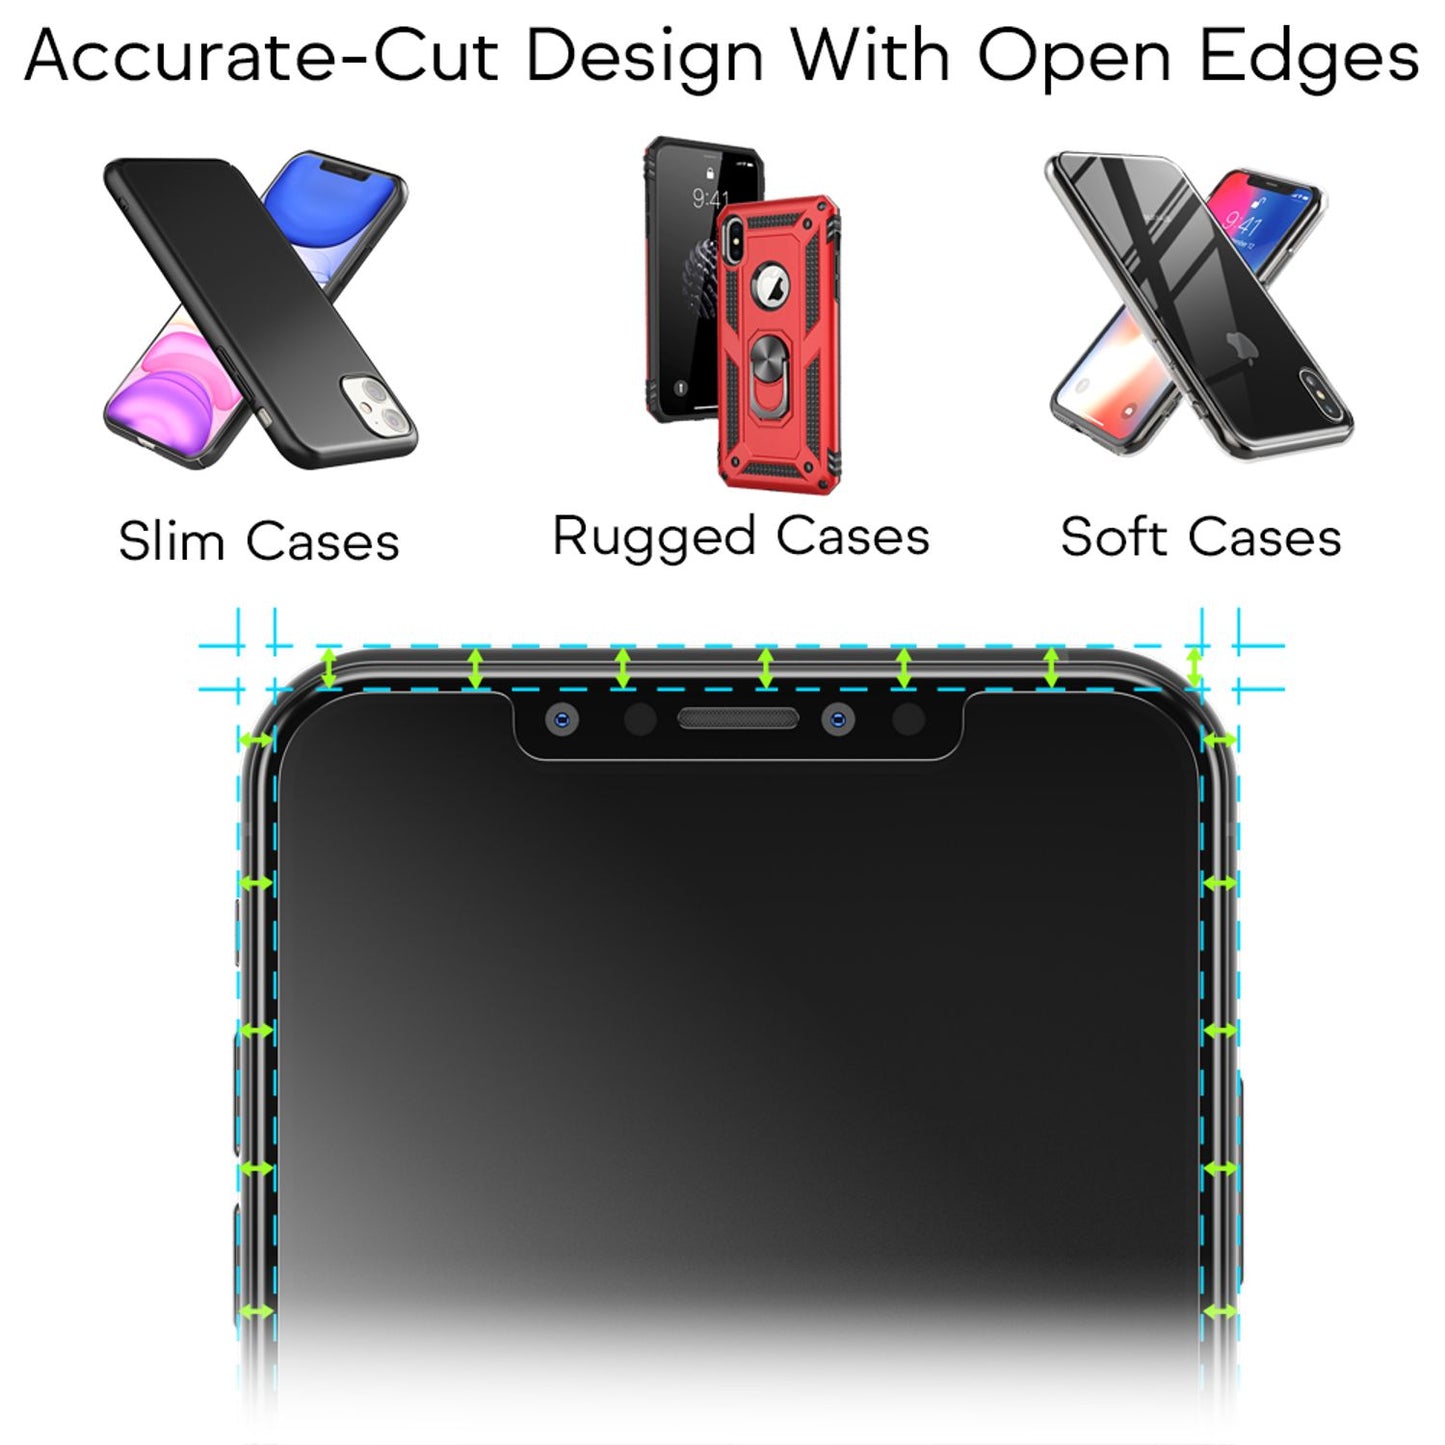 NALIA (2x) Schutzglas & Applikator - Set für iPhone 11 Pro / X / Xs, Handyschutz